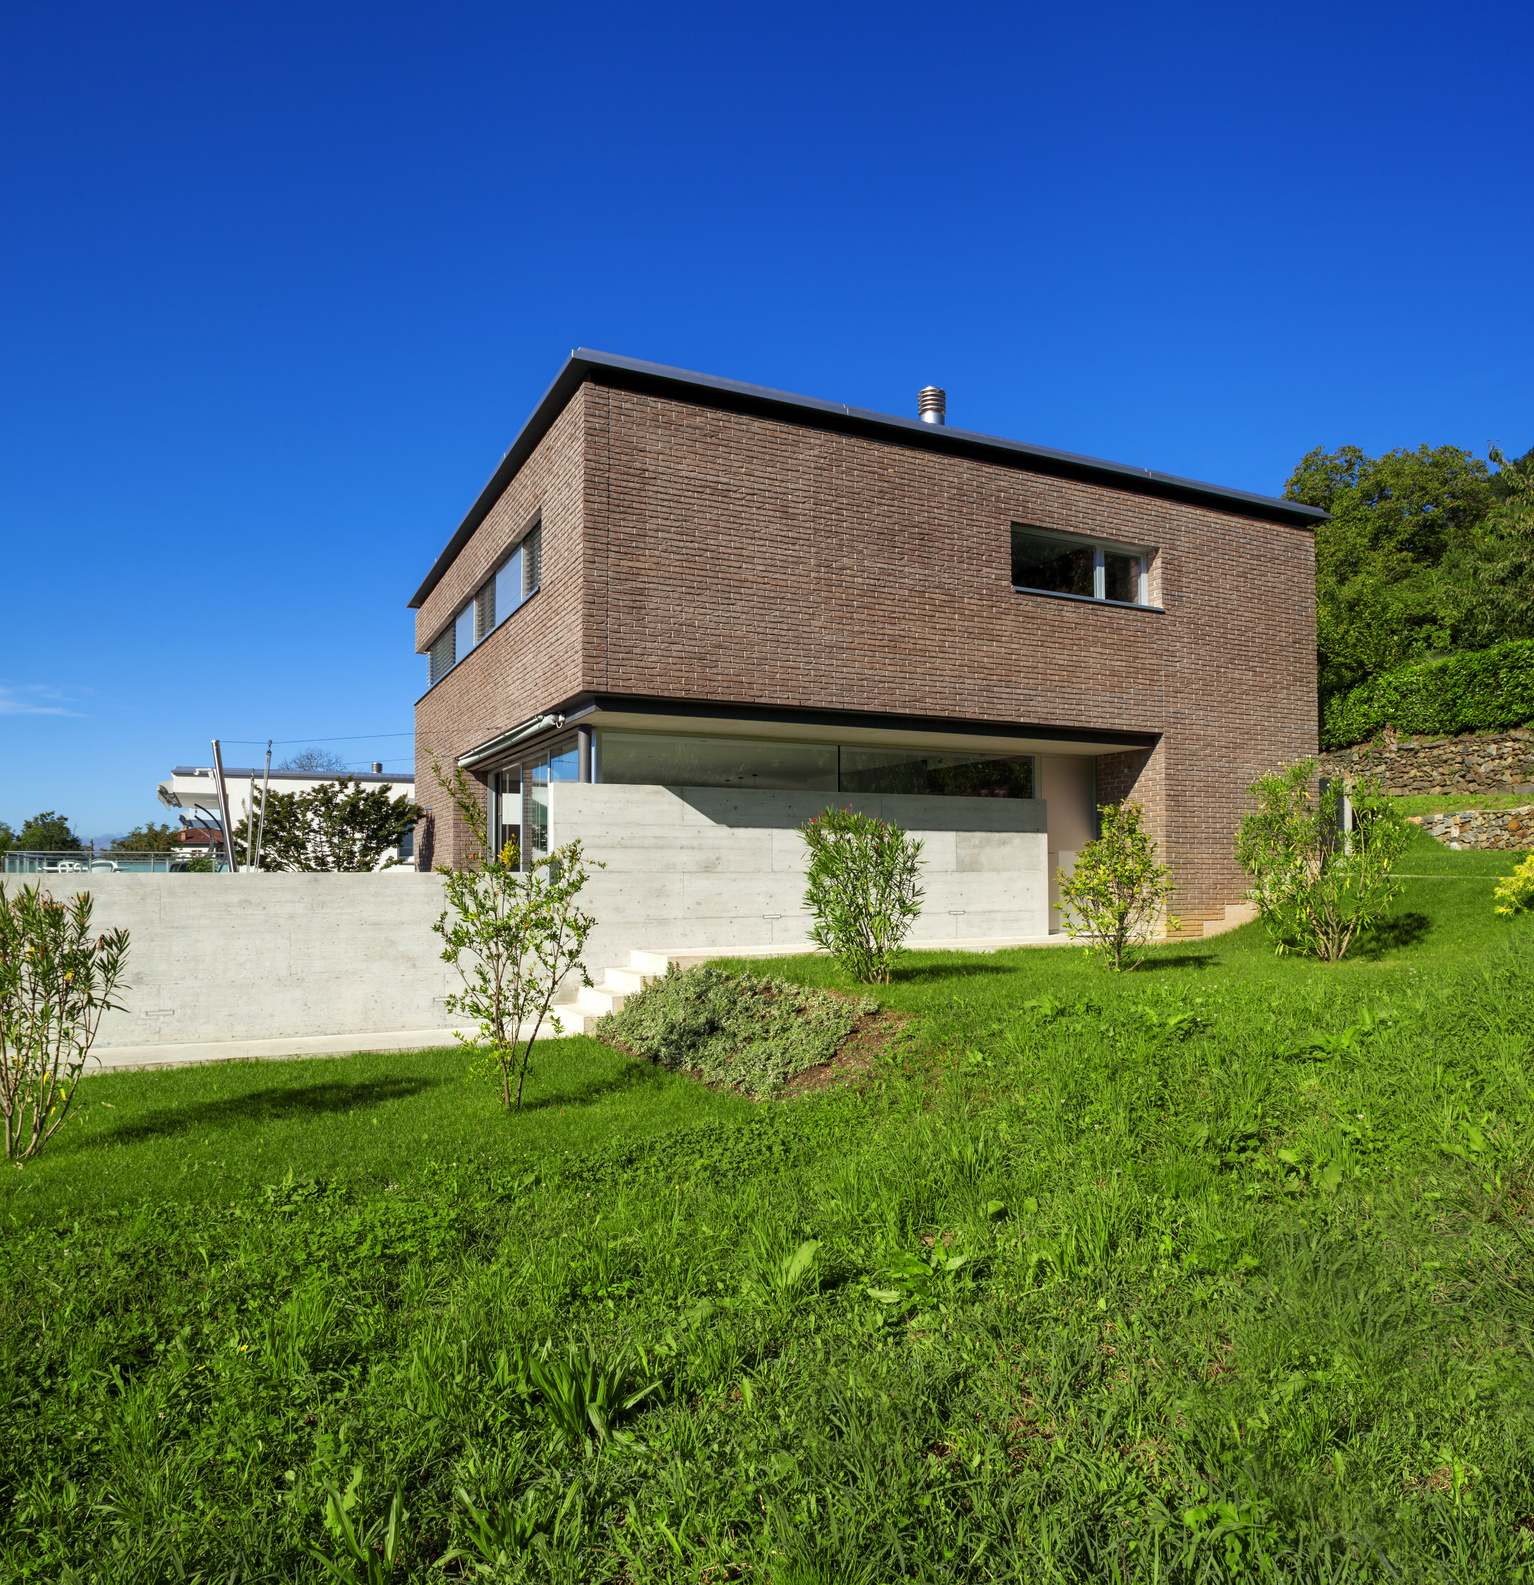 House of modern design